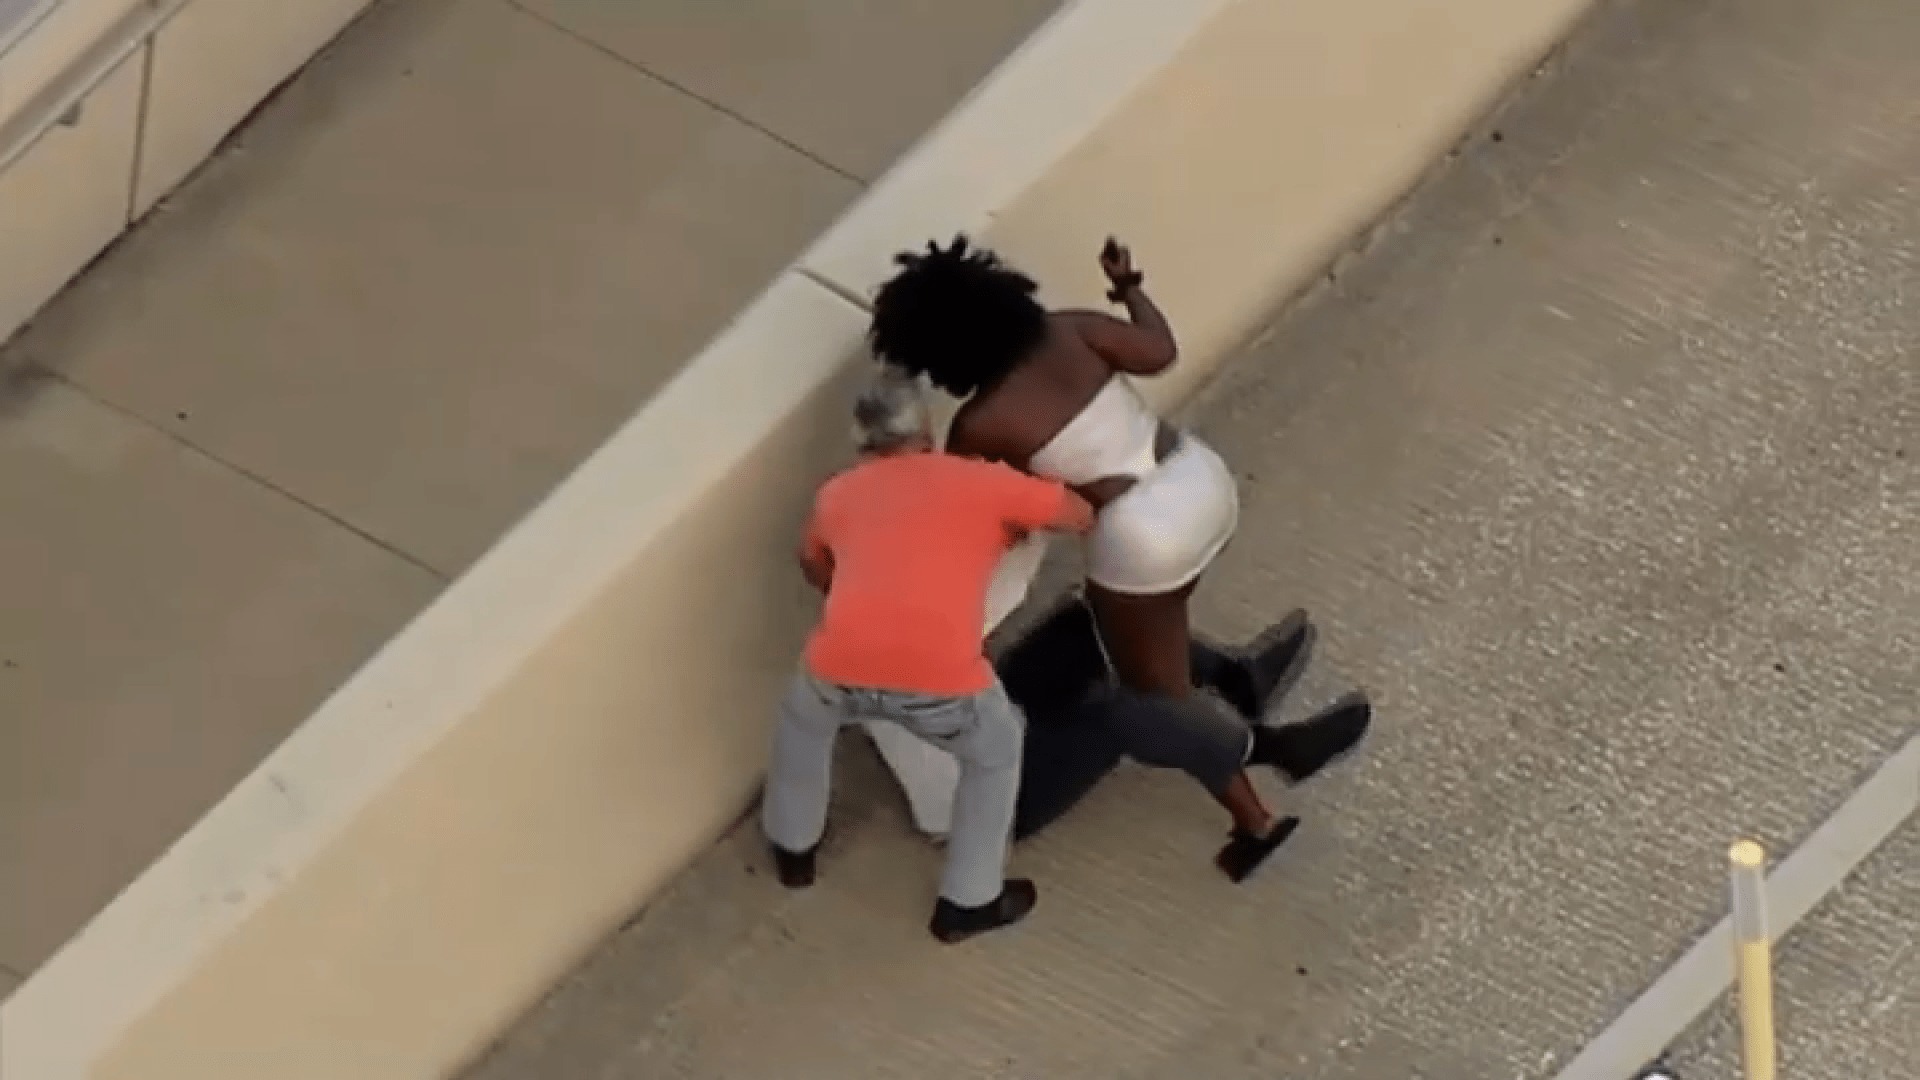 VIDEO: Mujer perdió los estribos tras un choque e intentó apuñalar a dos hombres en autopista de Florida